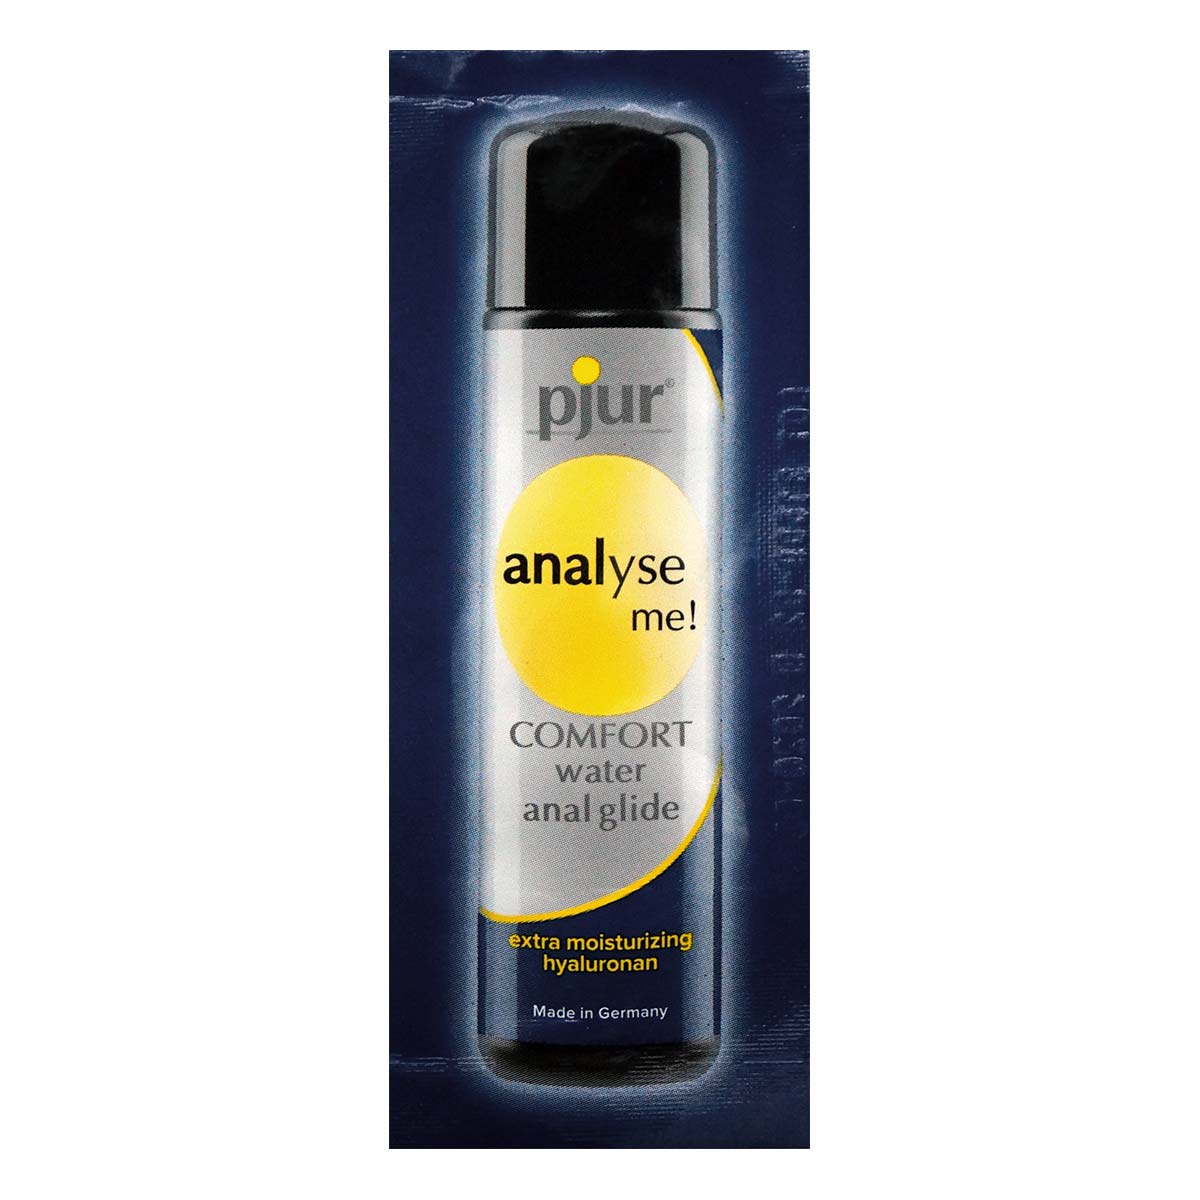 pjur analyse me! COMFORT 舒適肛交 2ml 水性潤滑液-p_2